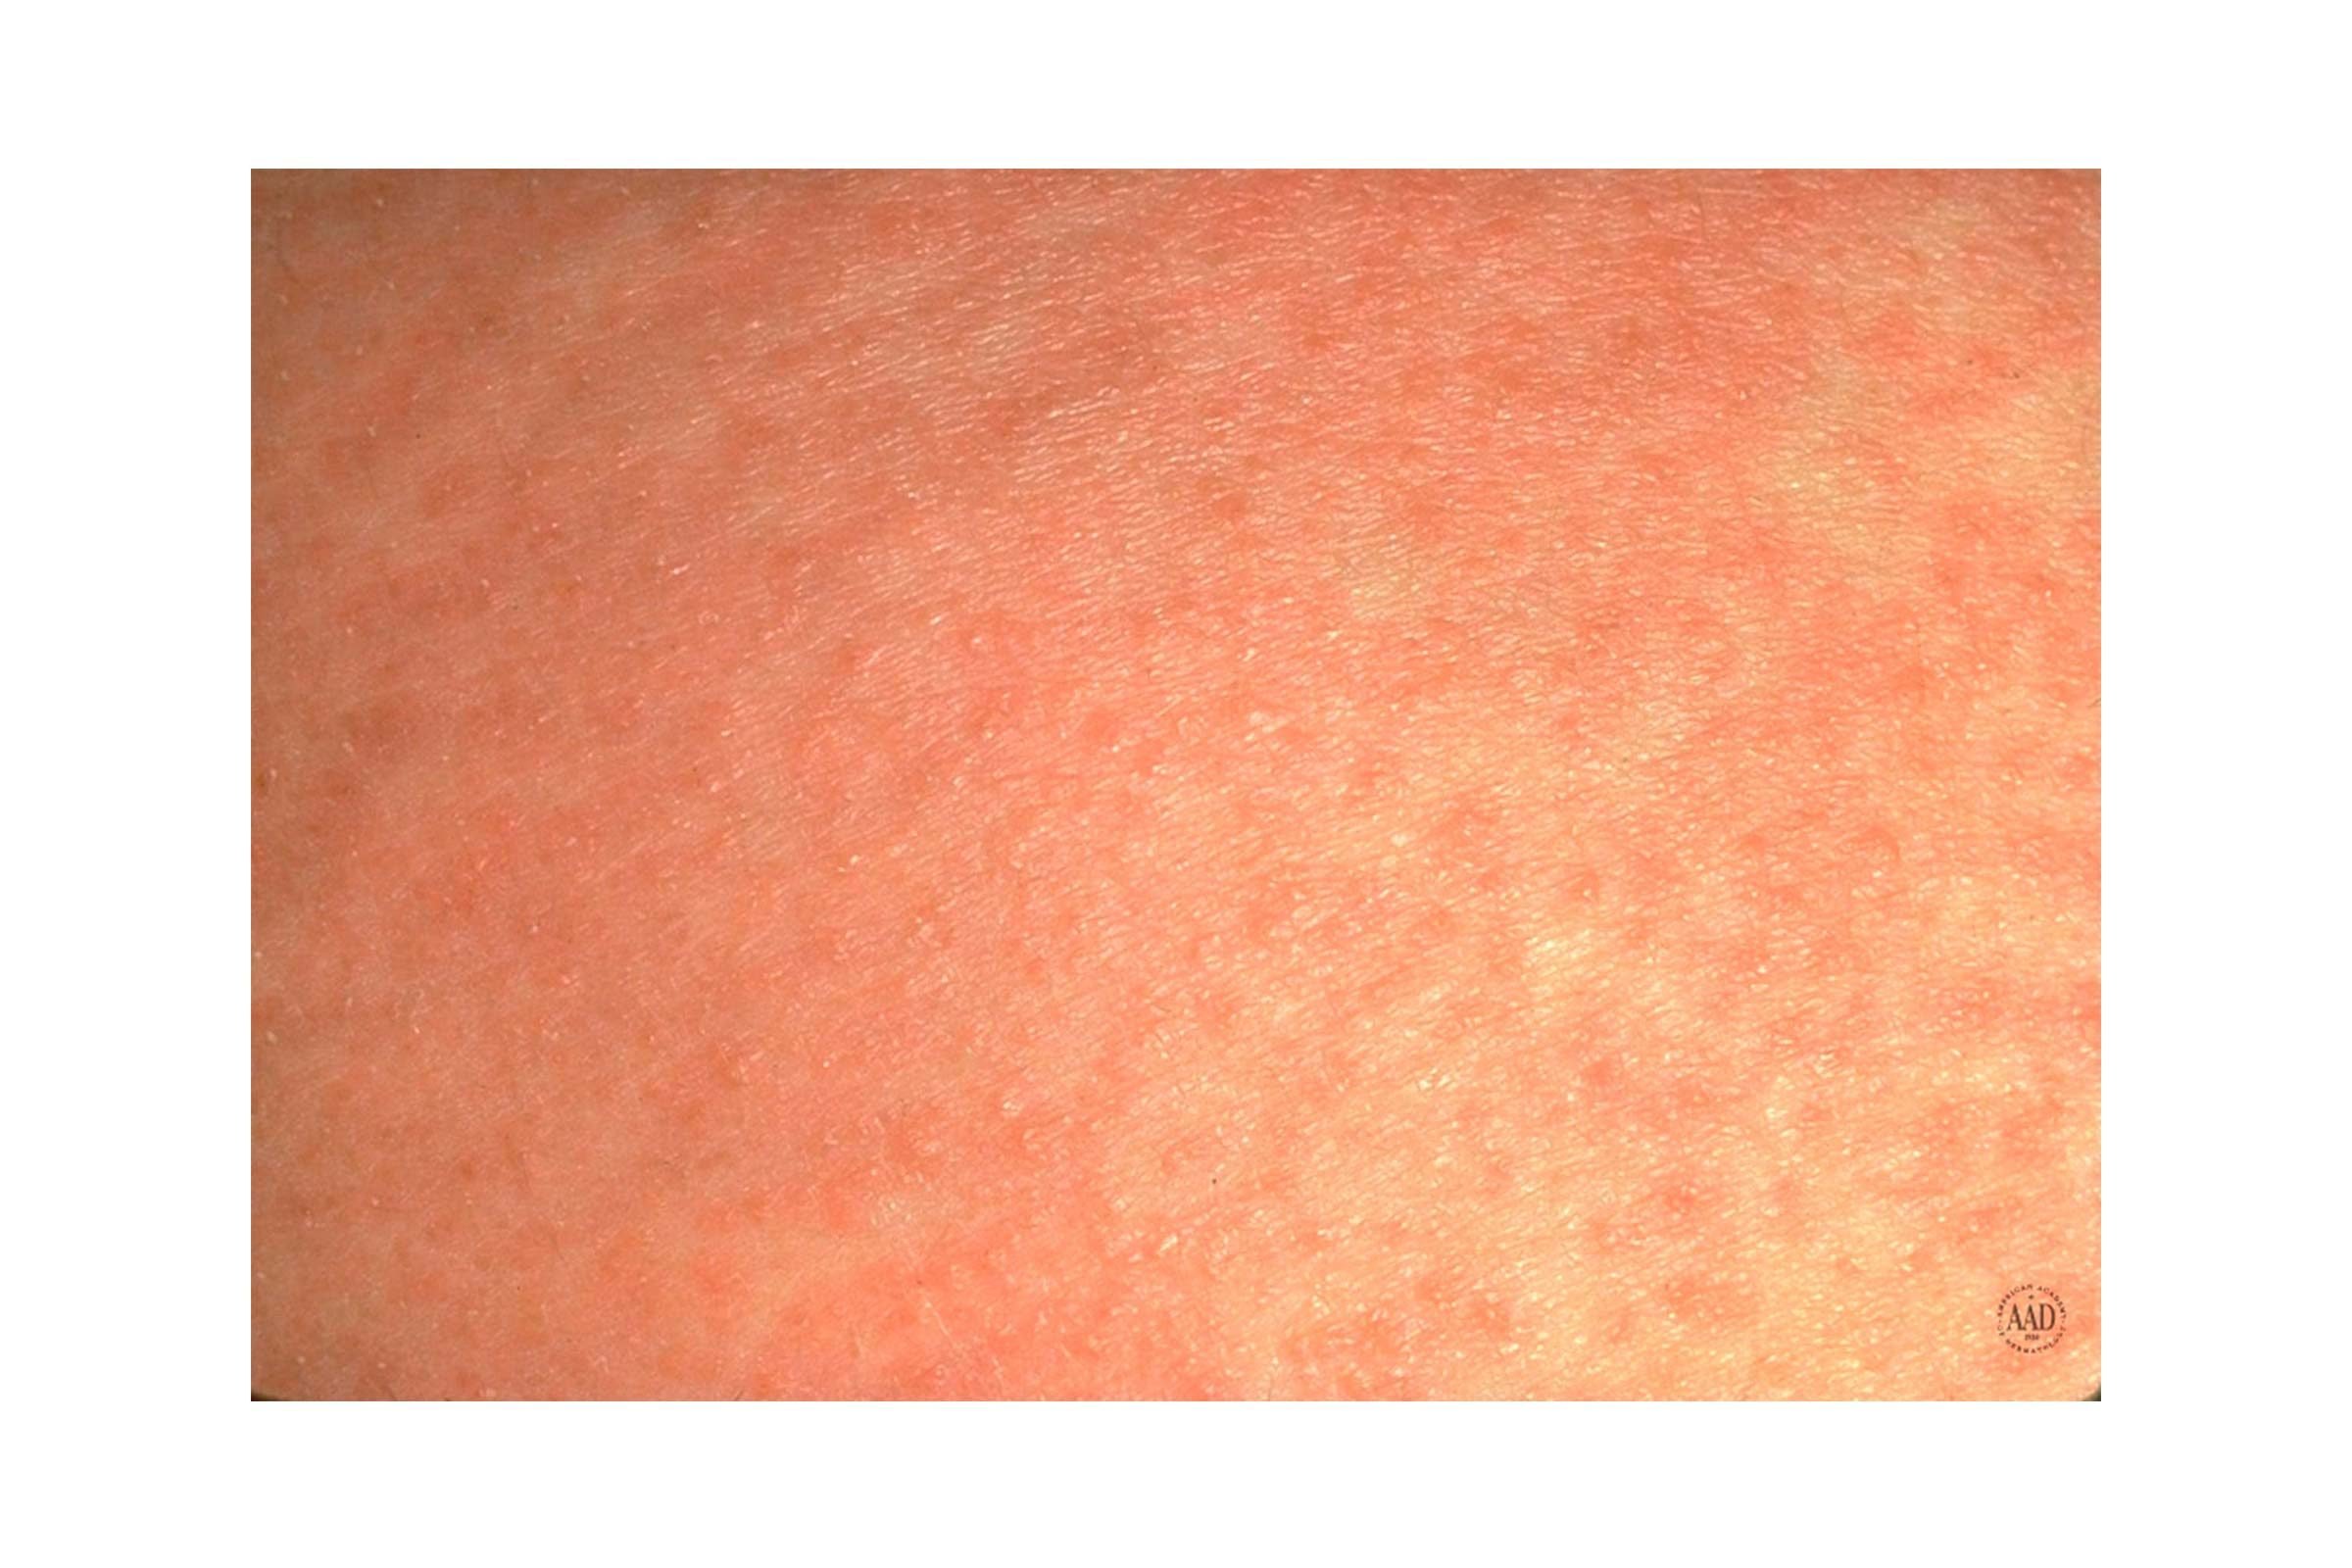 Itchy rash on inner thighs - Glow Community